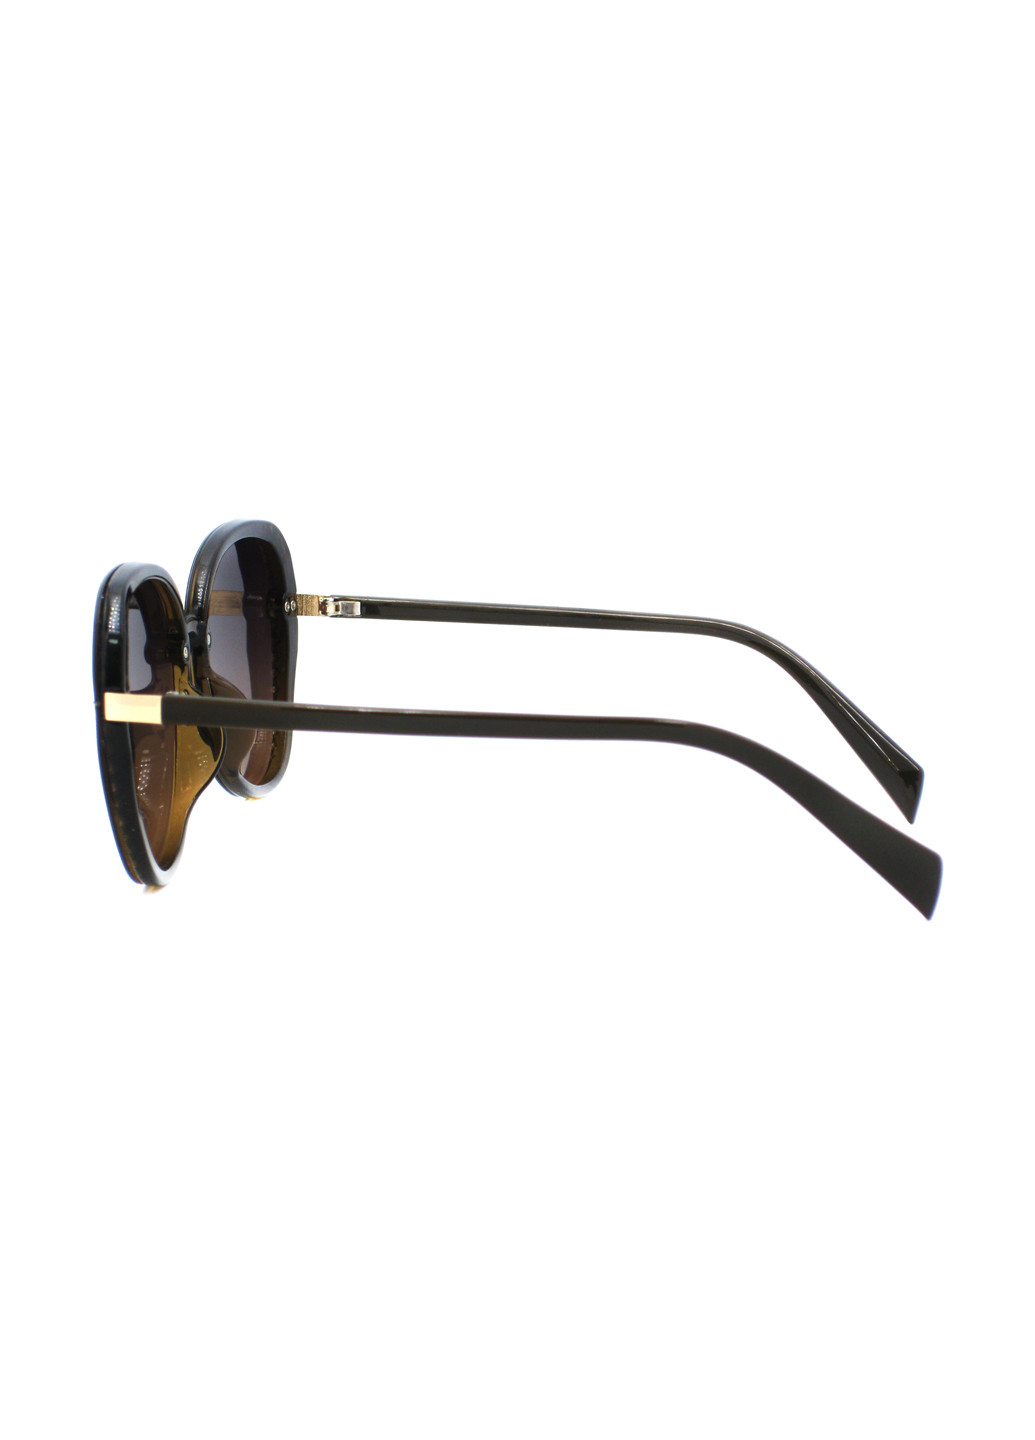 Cолнцезащитные очки Boccaccio bcp3984 03 (188291459)